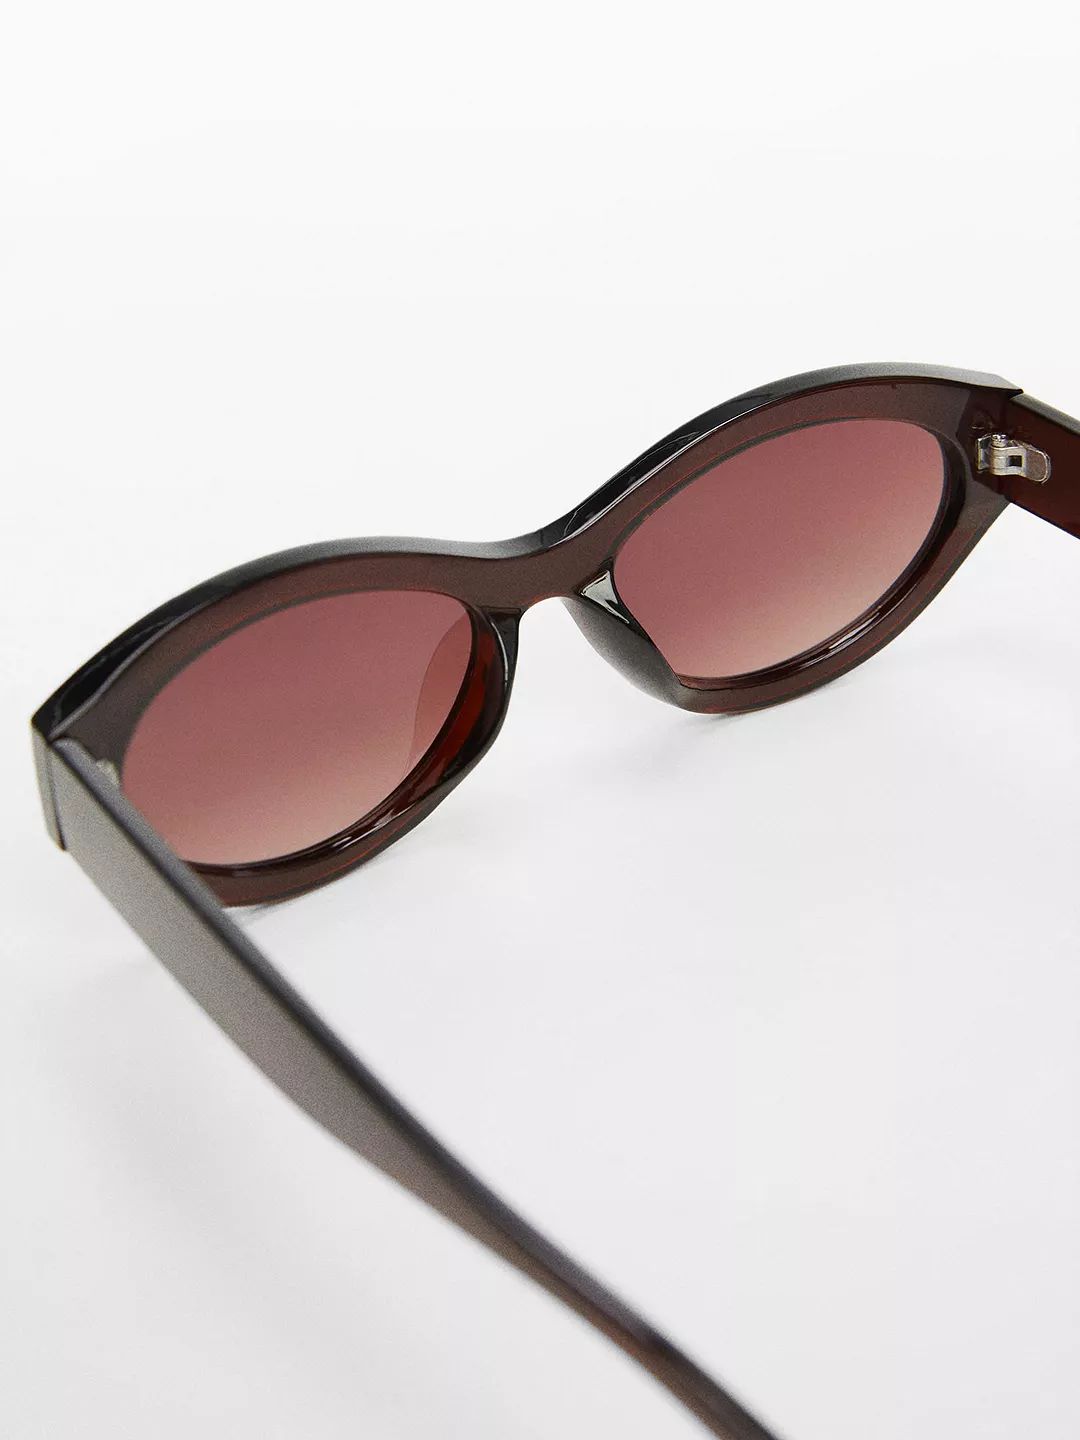 Mango Women's Marina Oval Sunglasses, Brown/Red Gradient | John Lewis (UK)